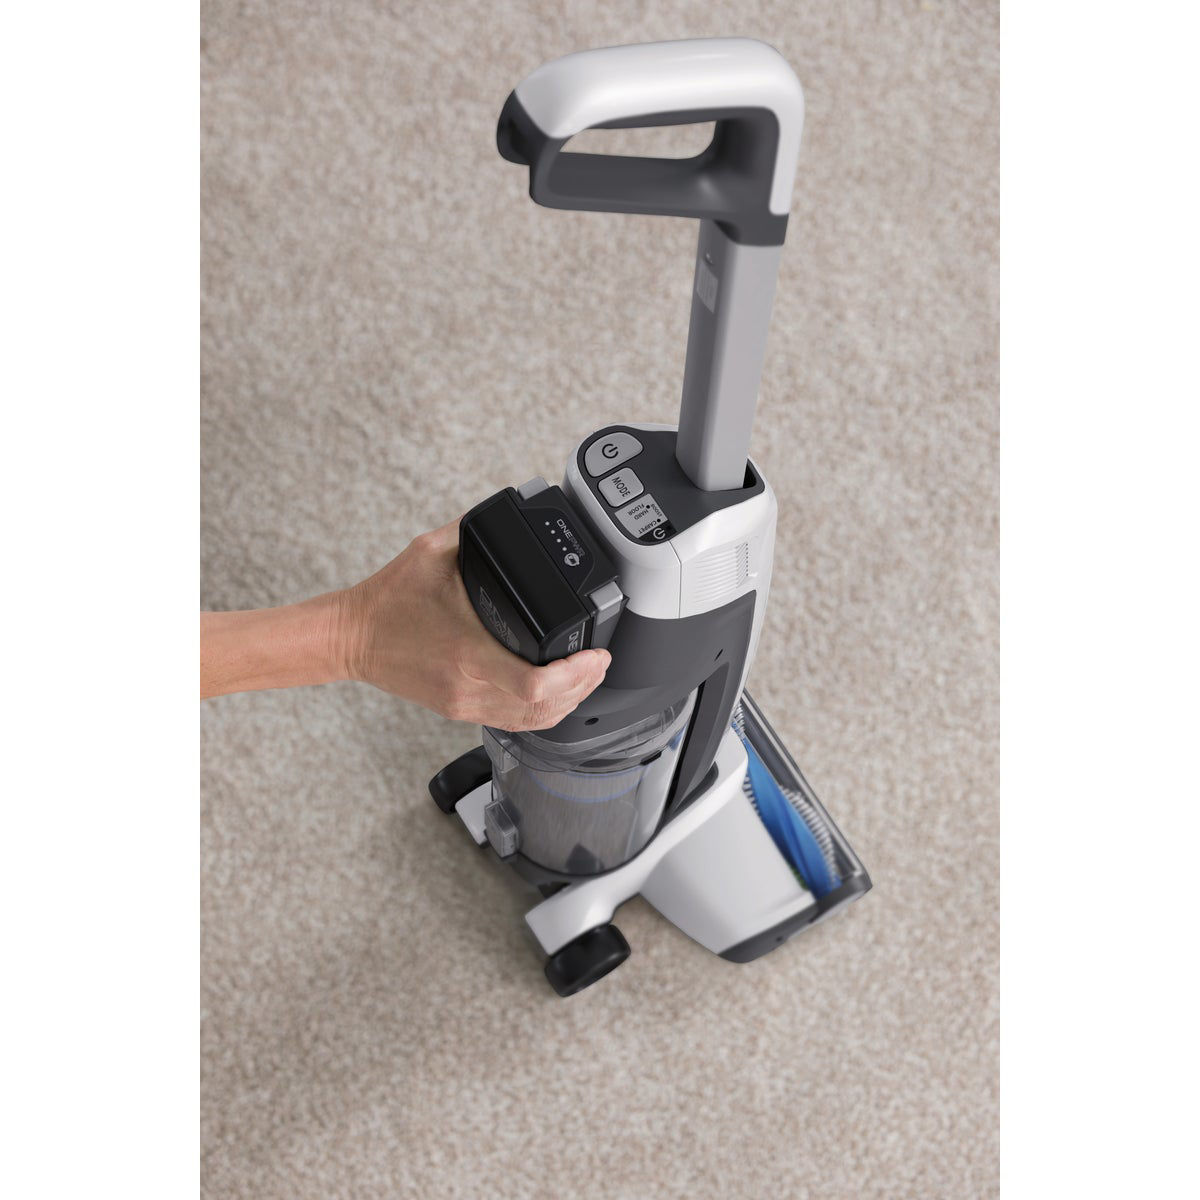 Hoover ONEPWR Evolve Pet Cordless Carpet & Floor Sweeper